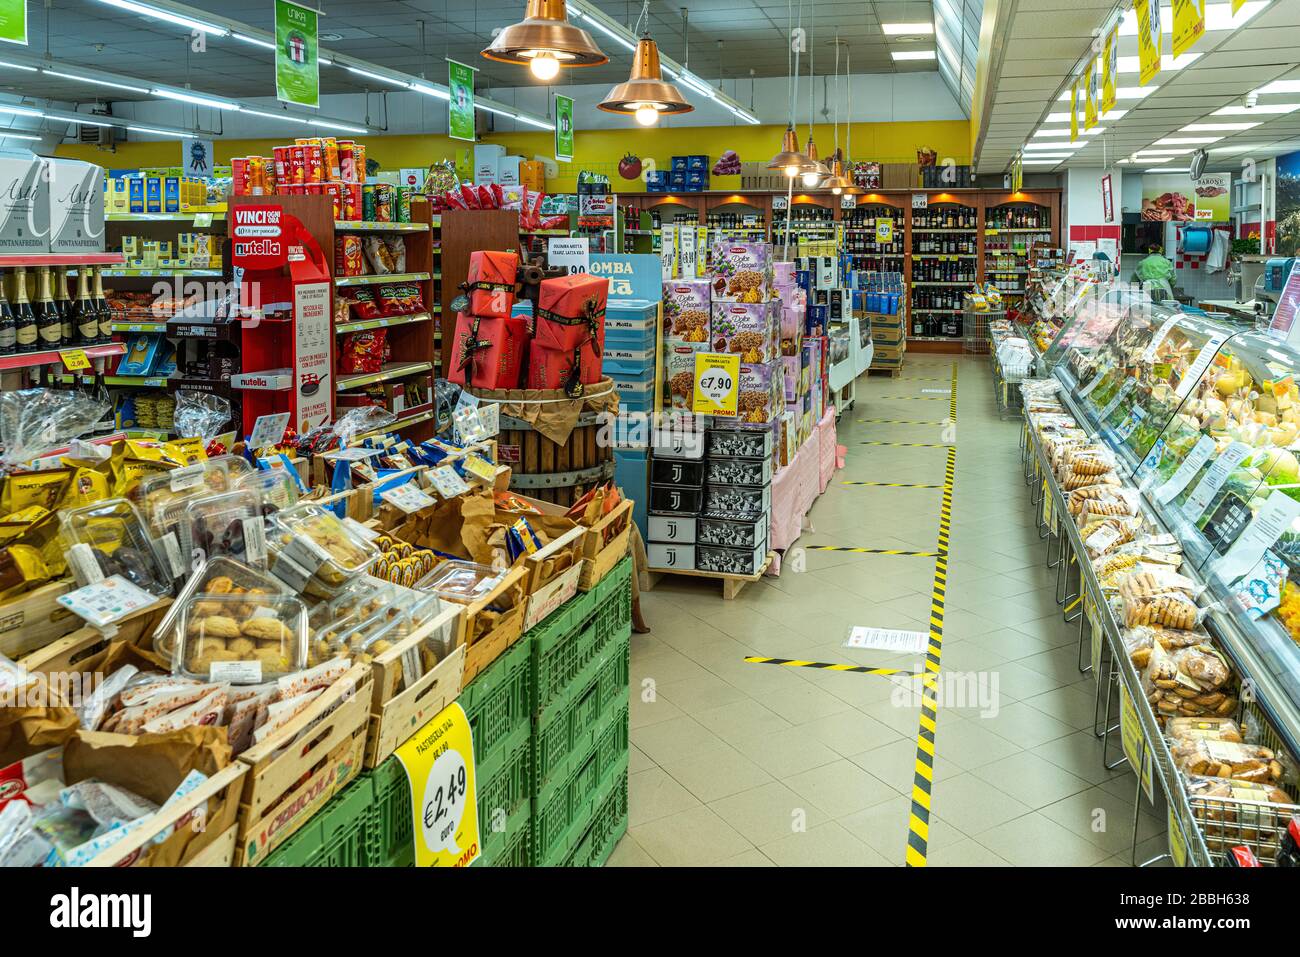 Empty supermarkets due to the Covid 19 pandemic, Coronavirus, despite the shelves full of merchandise. Abruzzo, Italy, Europe Stock Photo